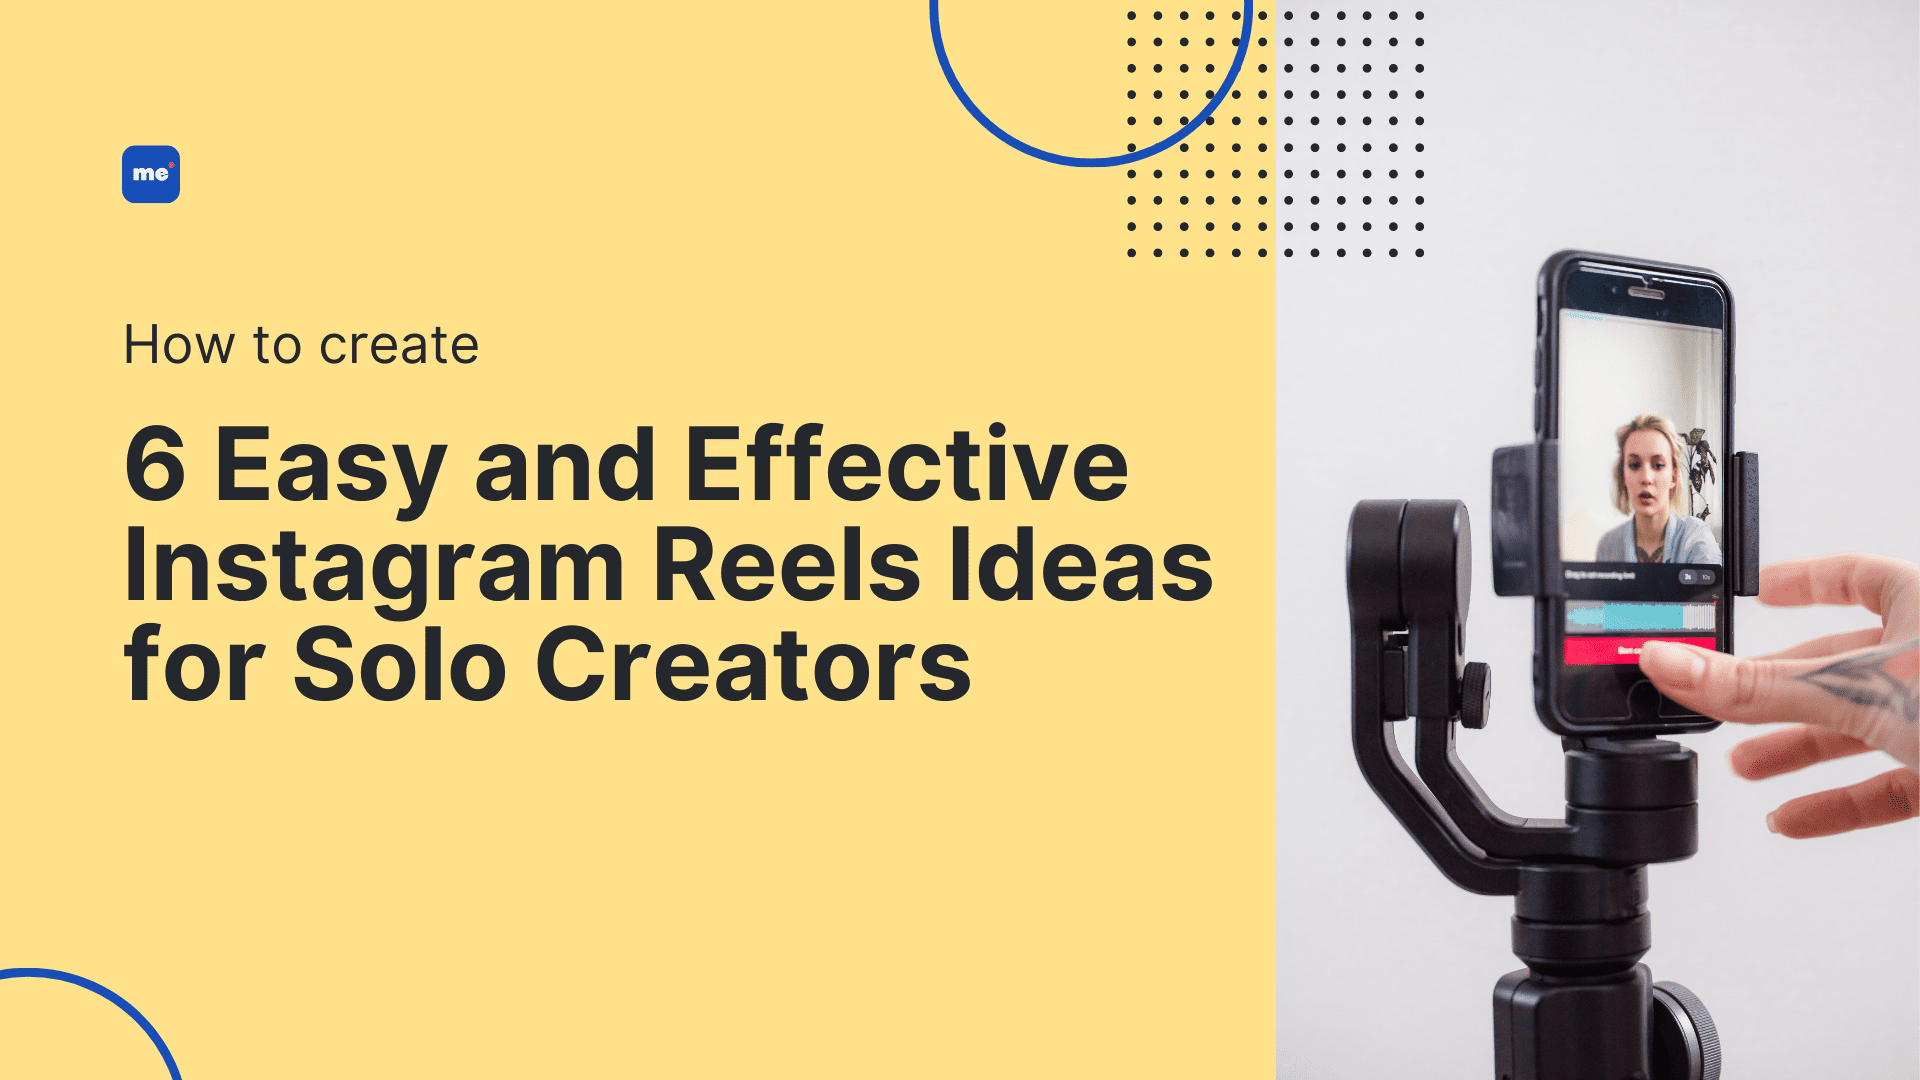 reel ideas for solo creators blog graphic